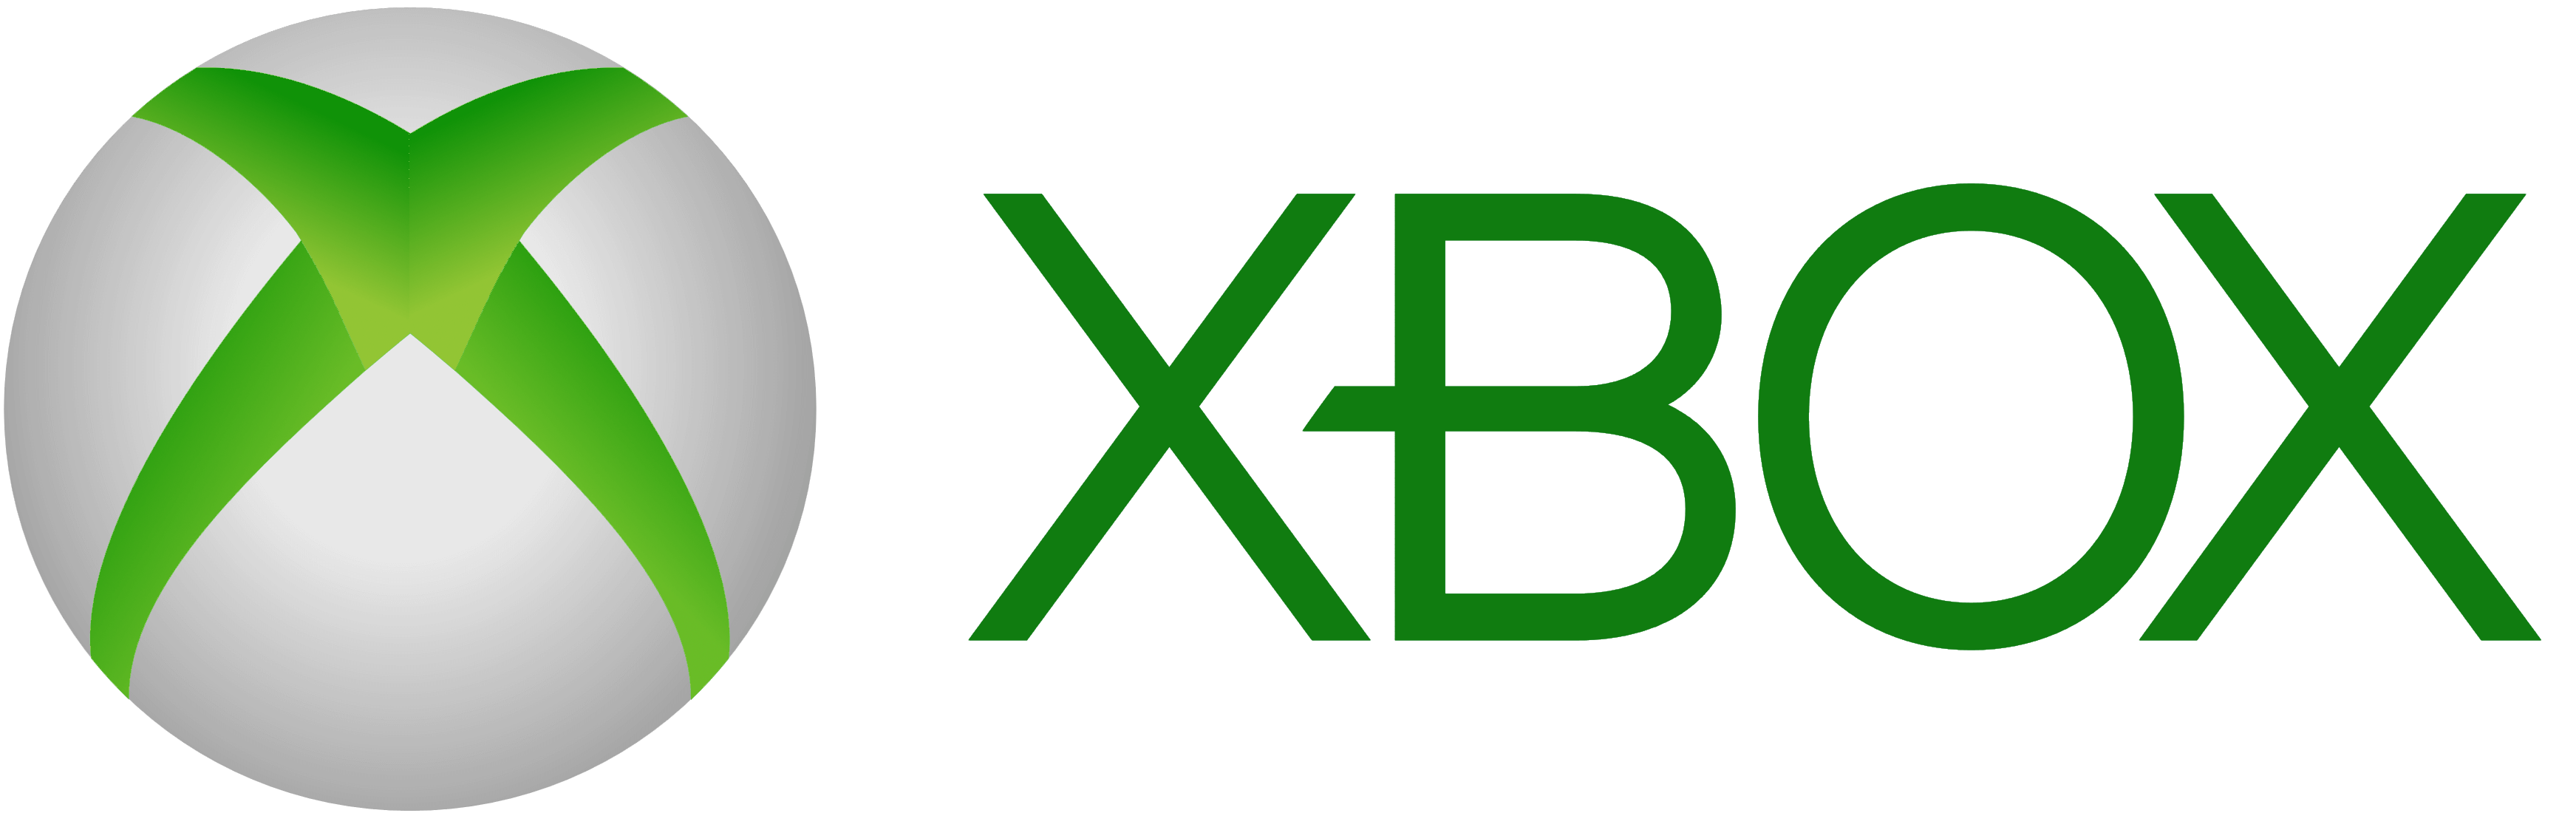 Xbox logo, logotype